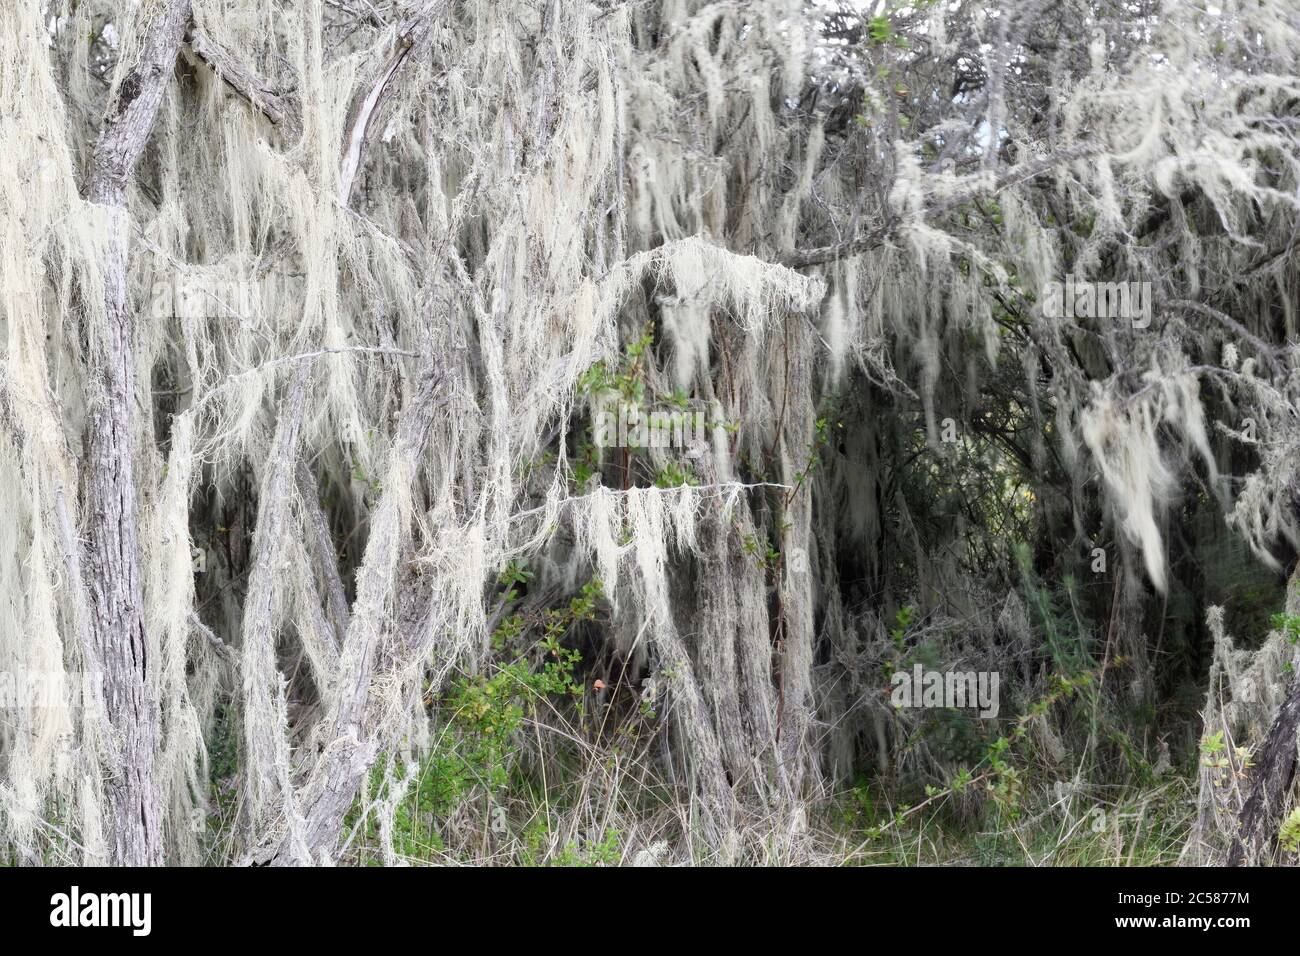 Old Men’s Beard lichen (Asnea barbata) growing on a tree, Patagonia National Park, Chacabuco valley near Cochrane, Aysen Region, Patagonia, Chile Stock Photo